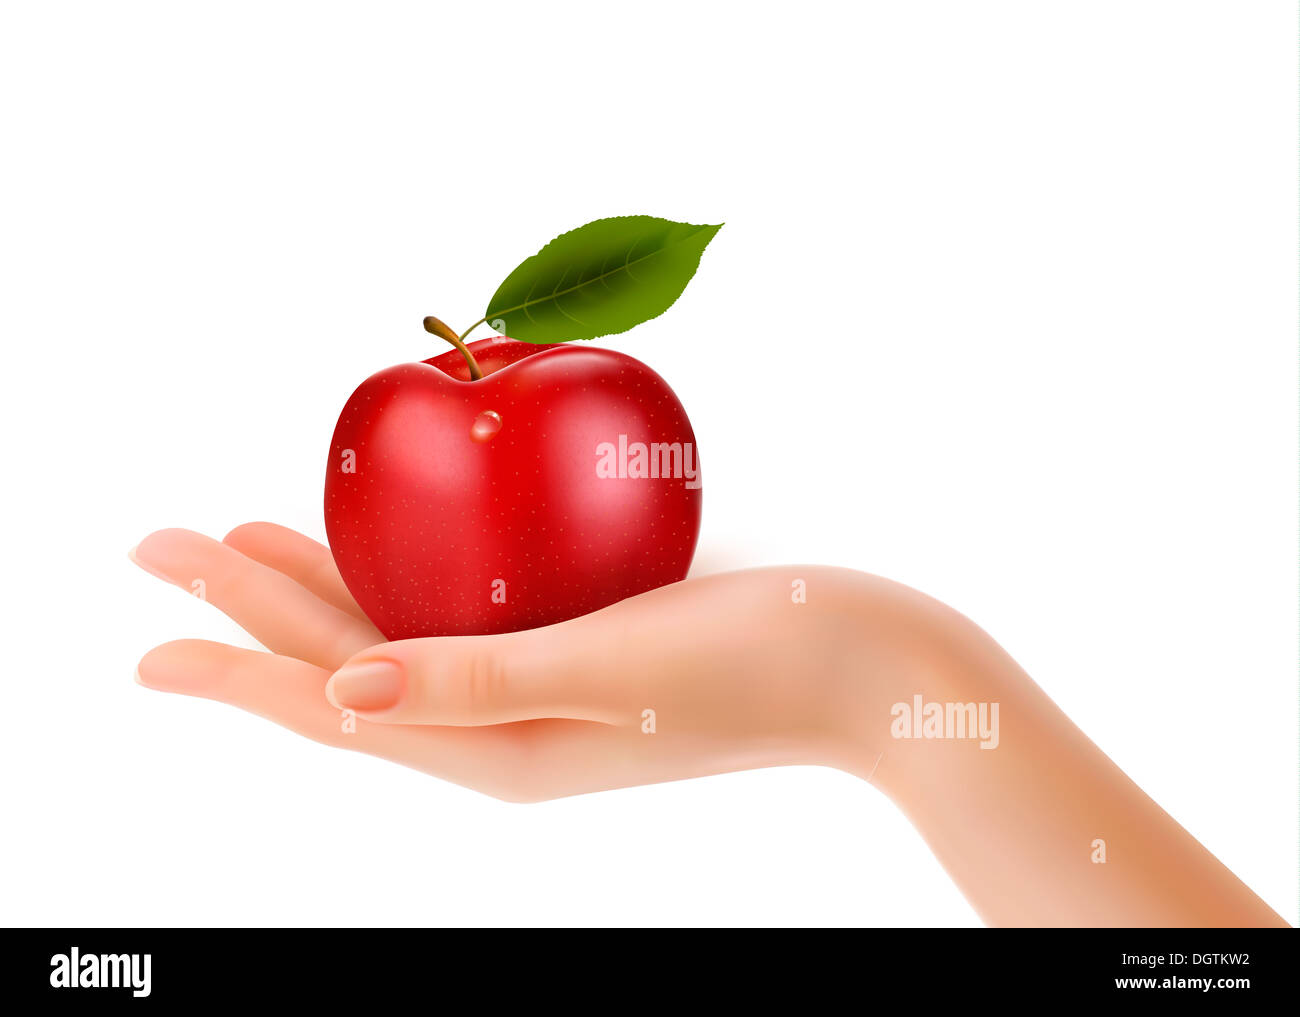 Яблоко в руках на прозрачном фоне